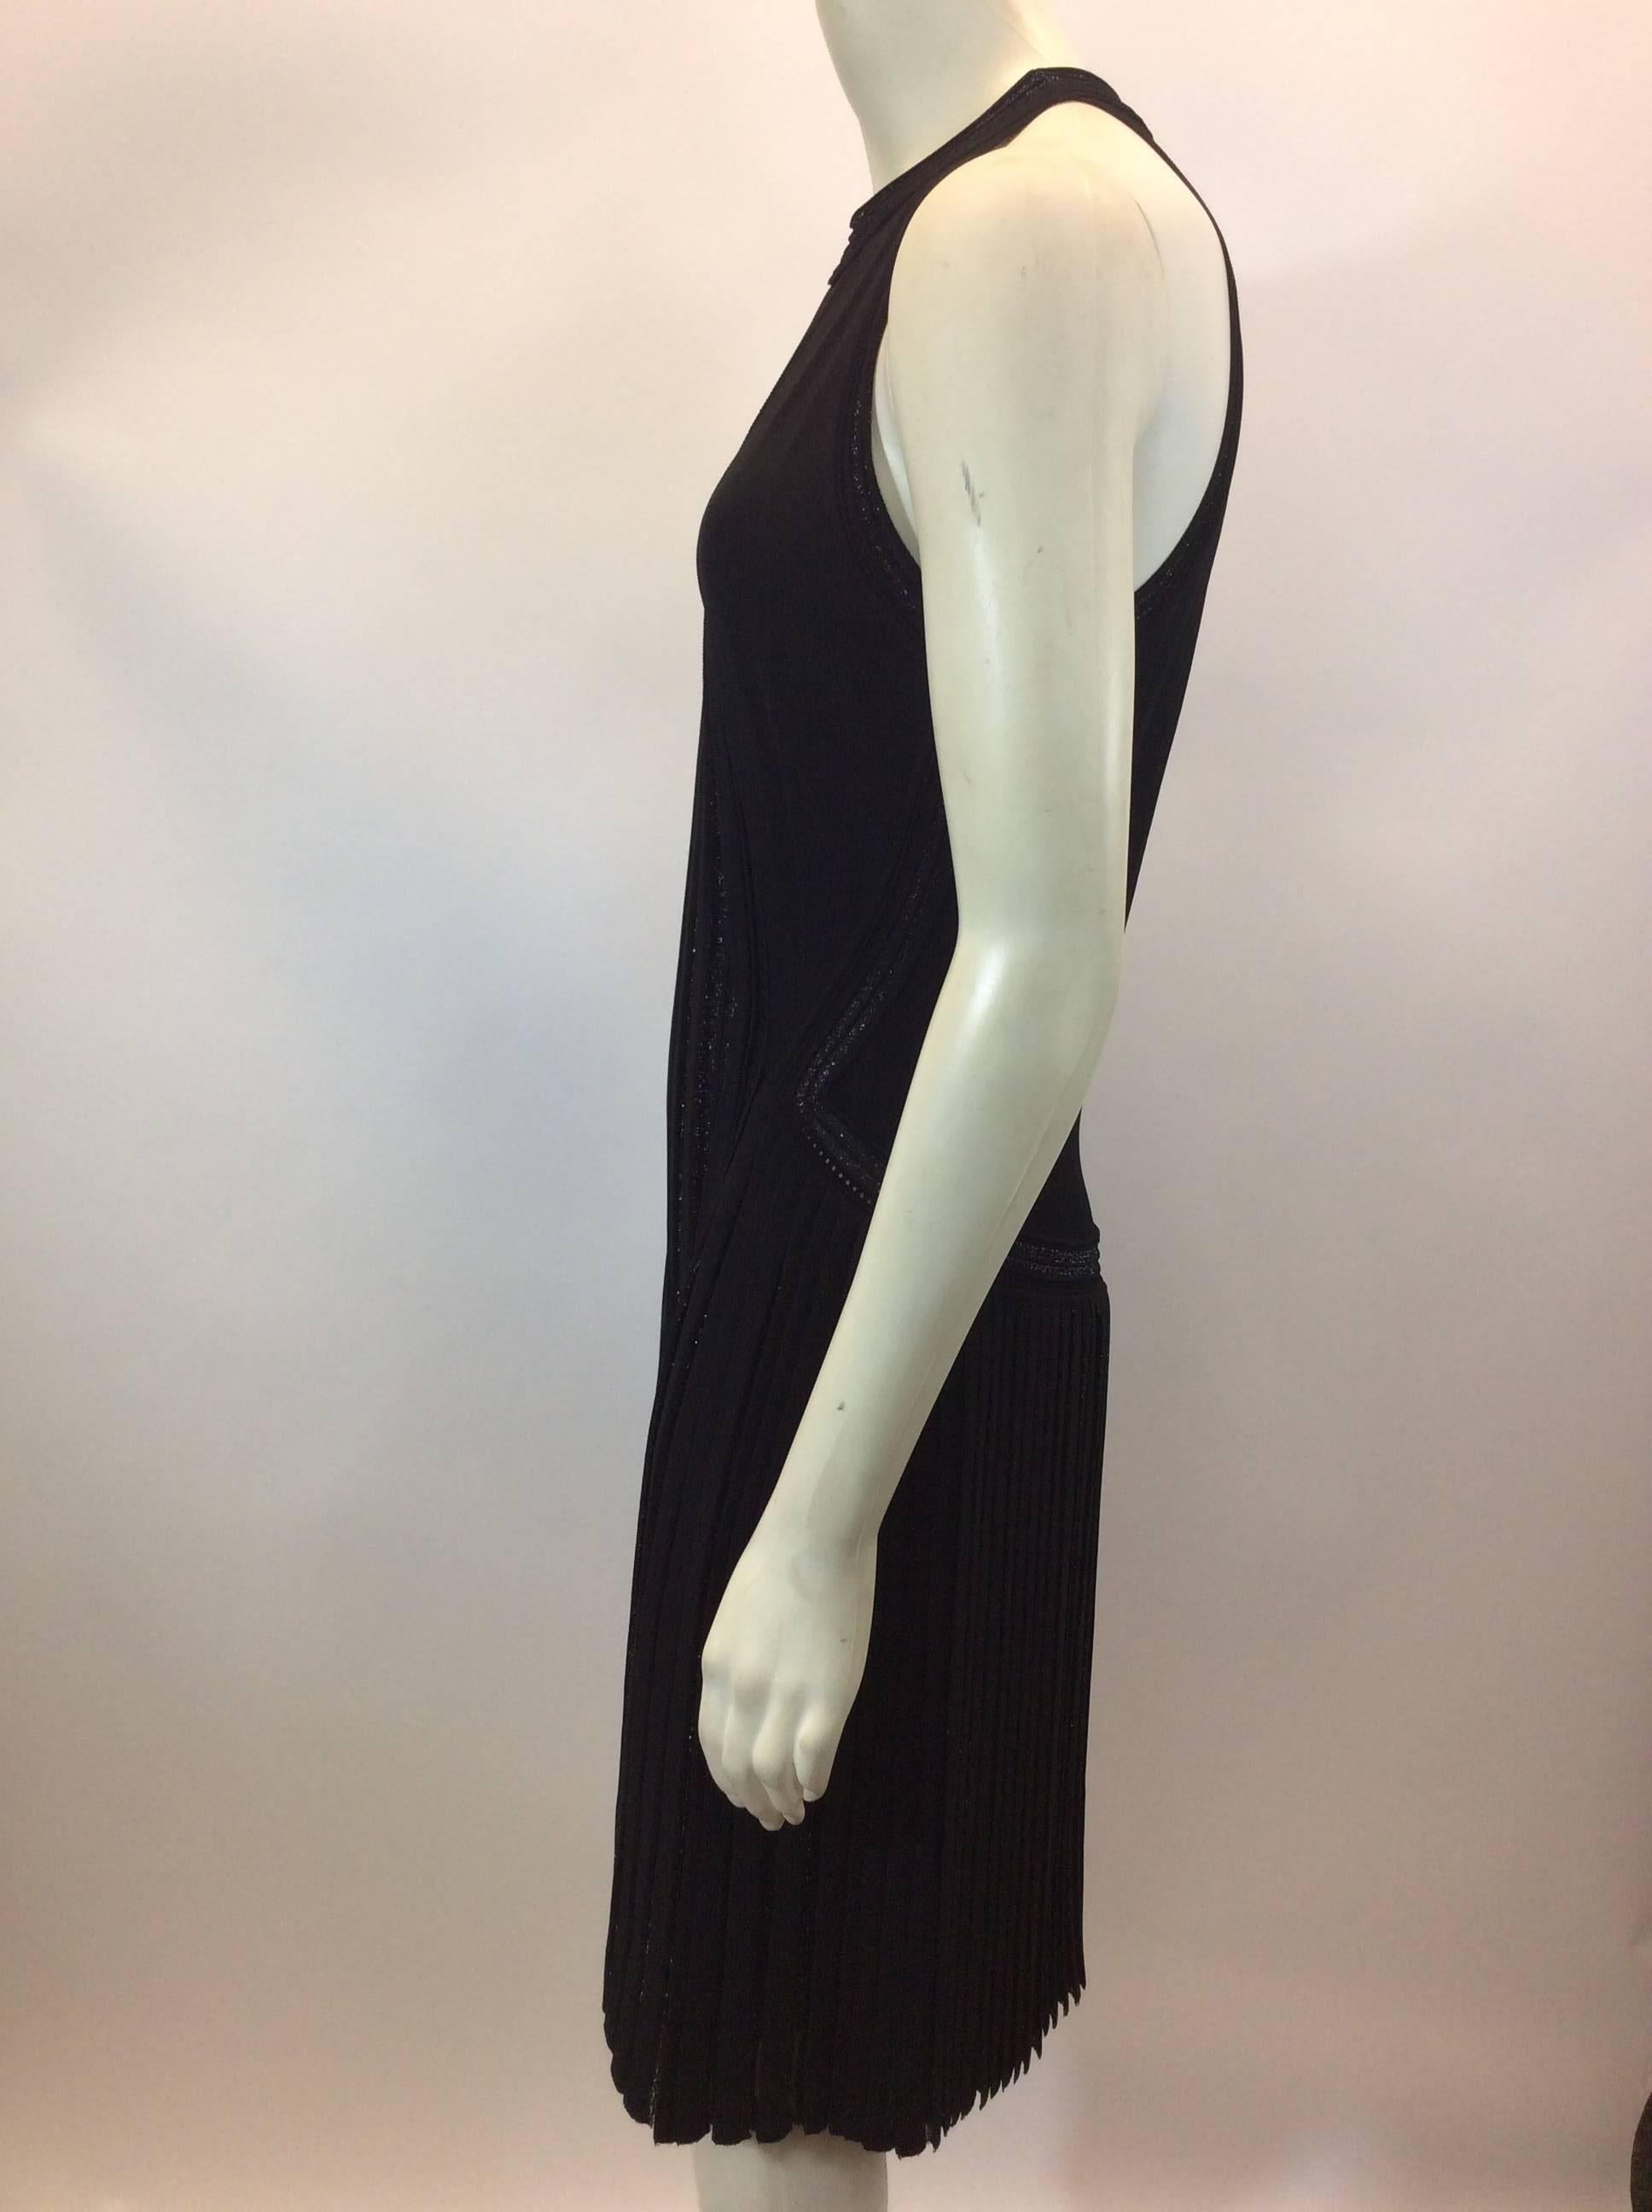 Robert Cavalli Black Formal Dress
NWT 
$1299
Size 40
Length 37